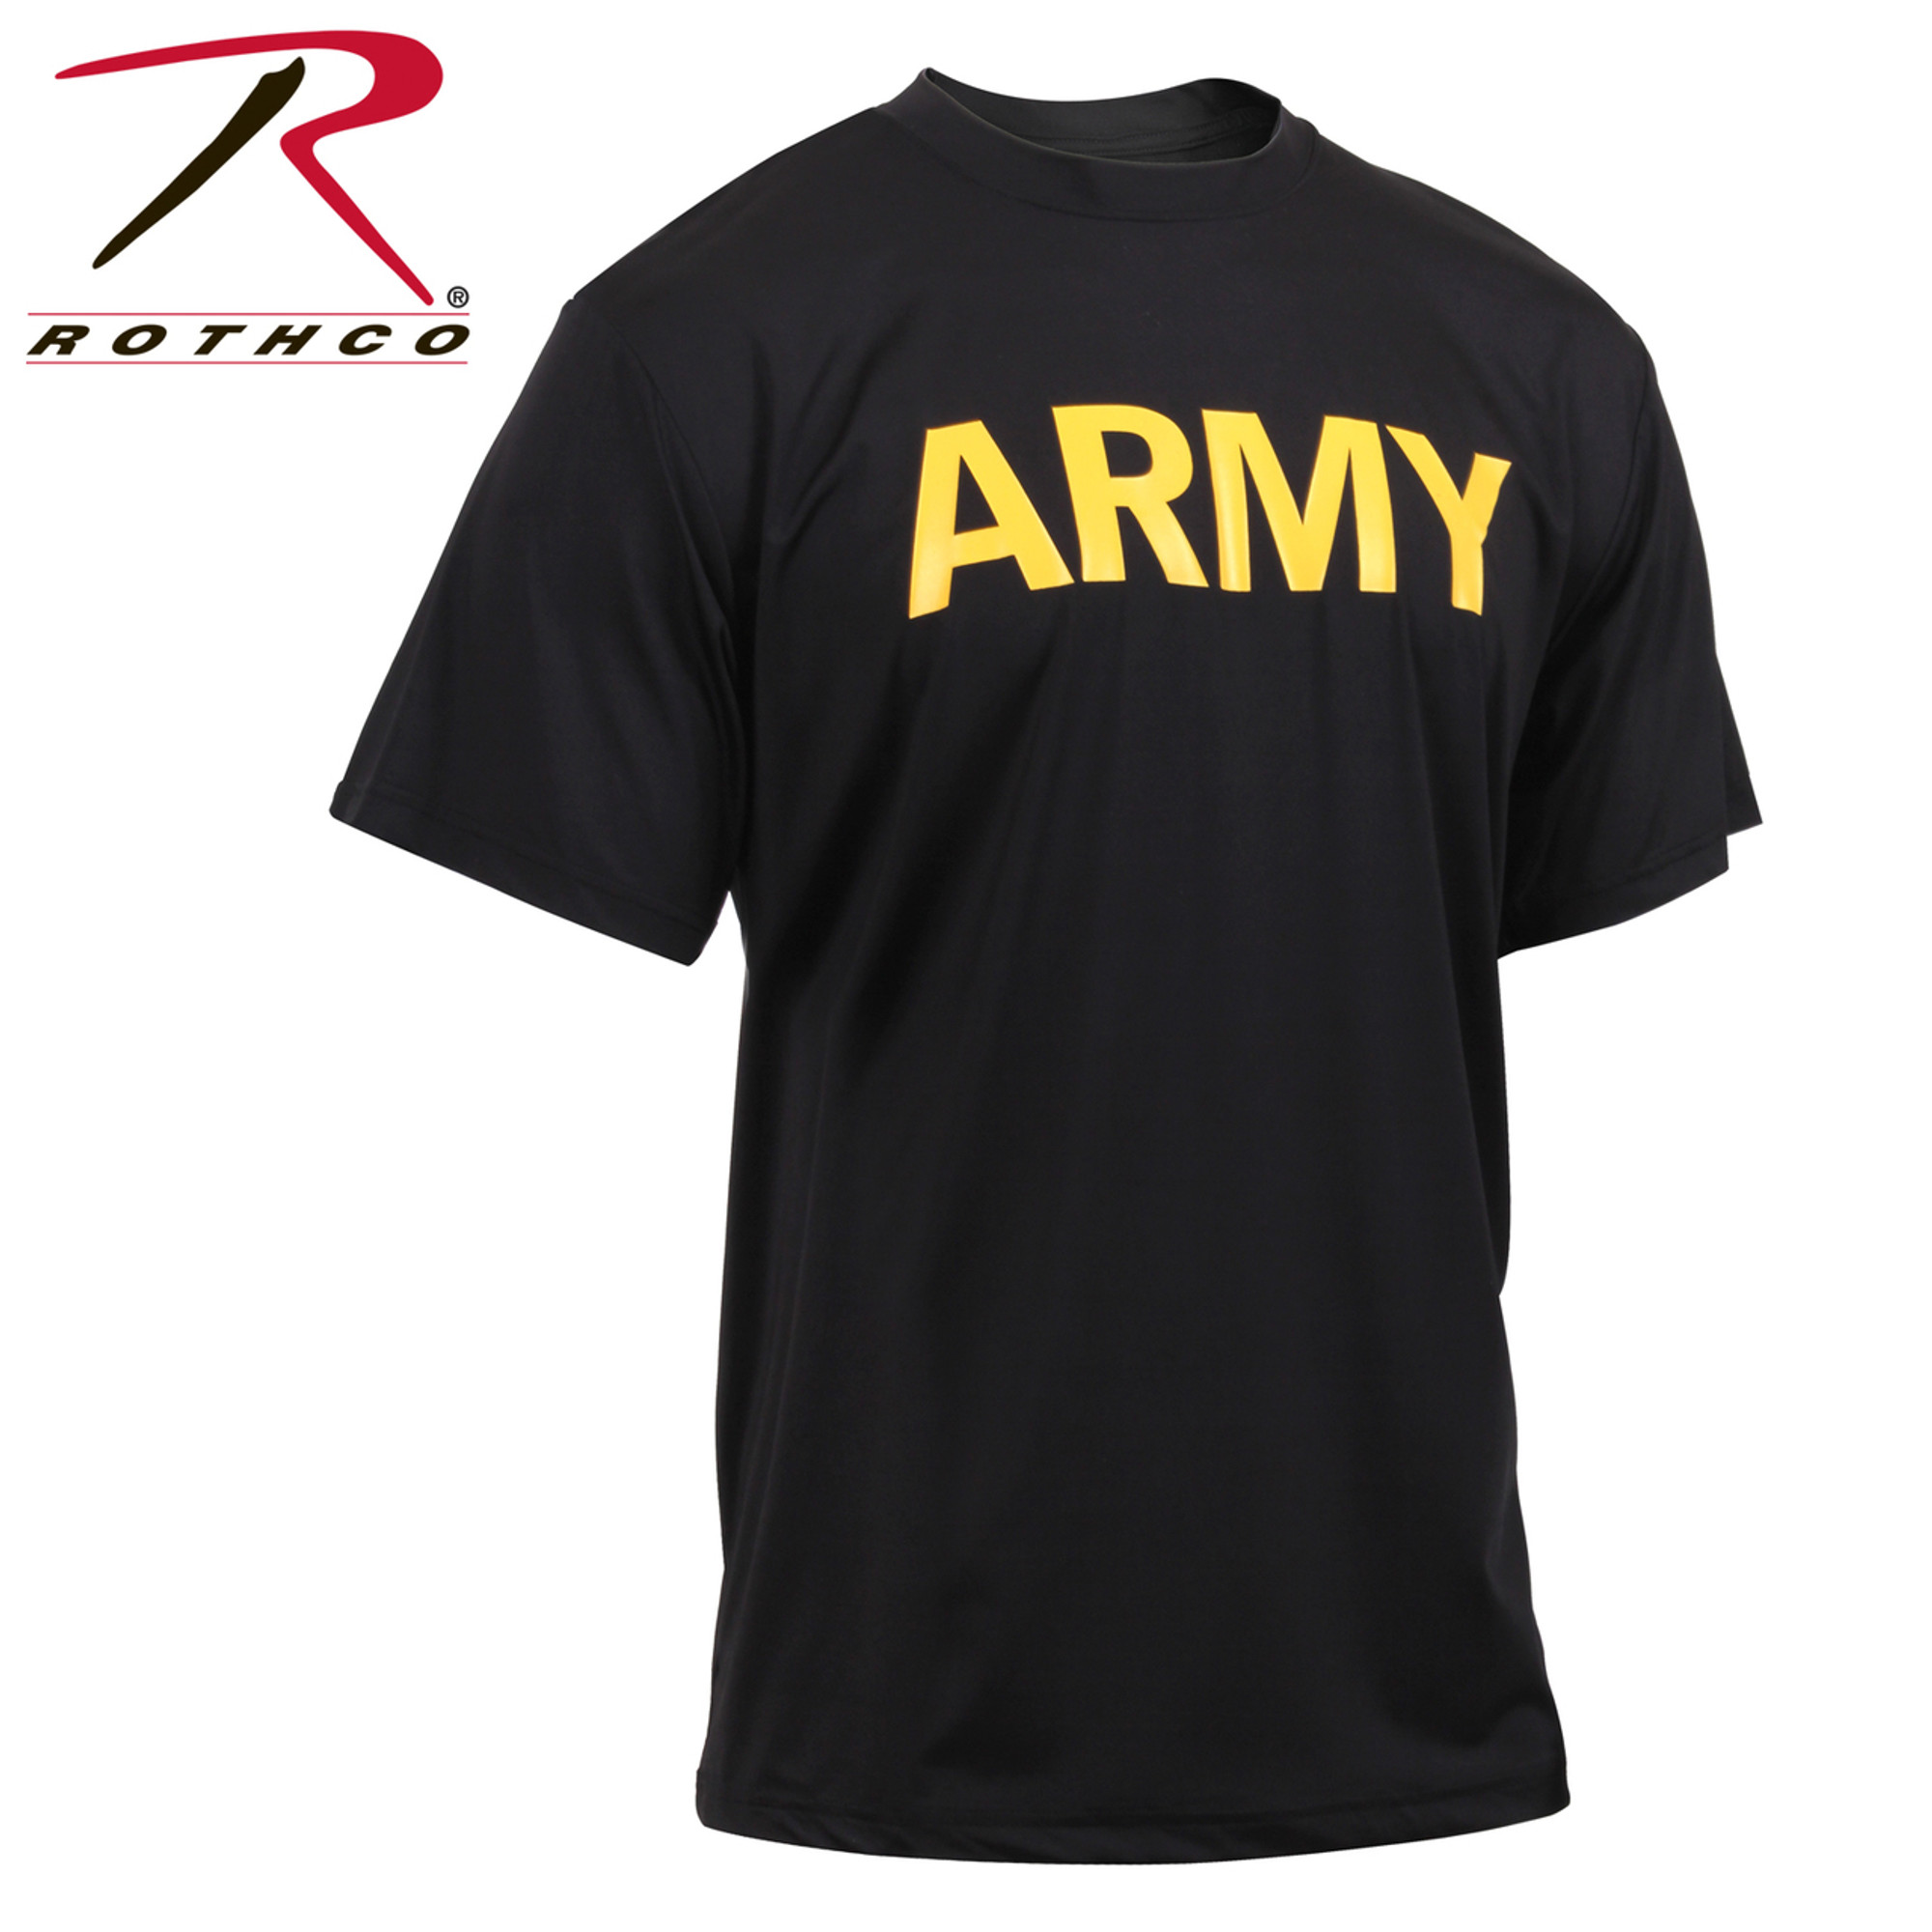 Rothco Army Physical Training Shirt - Black